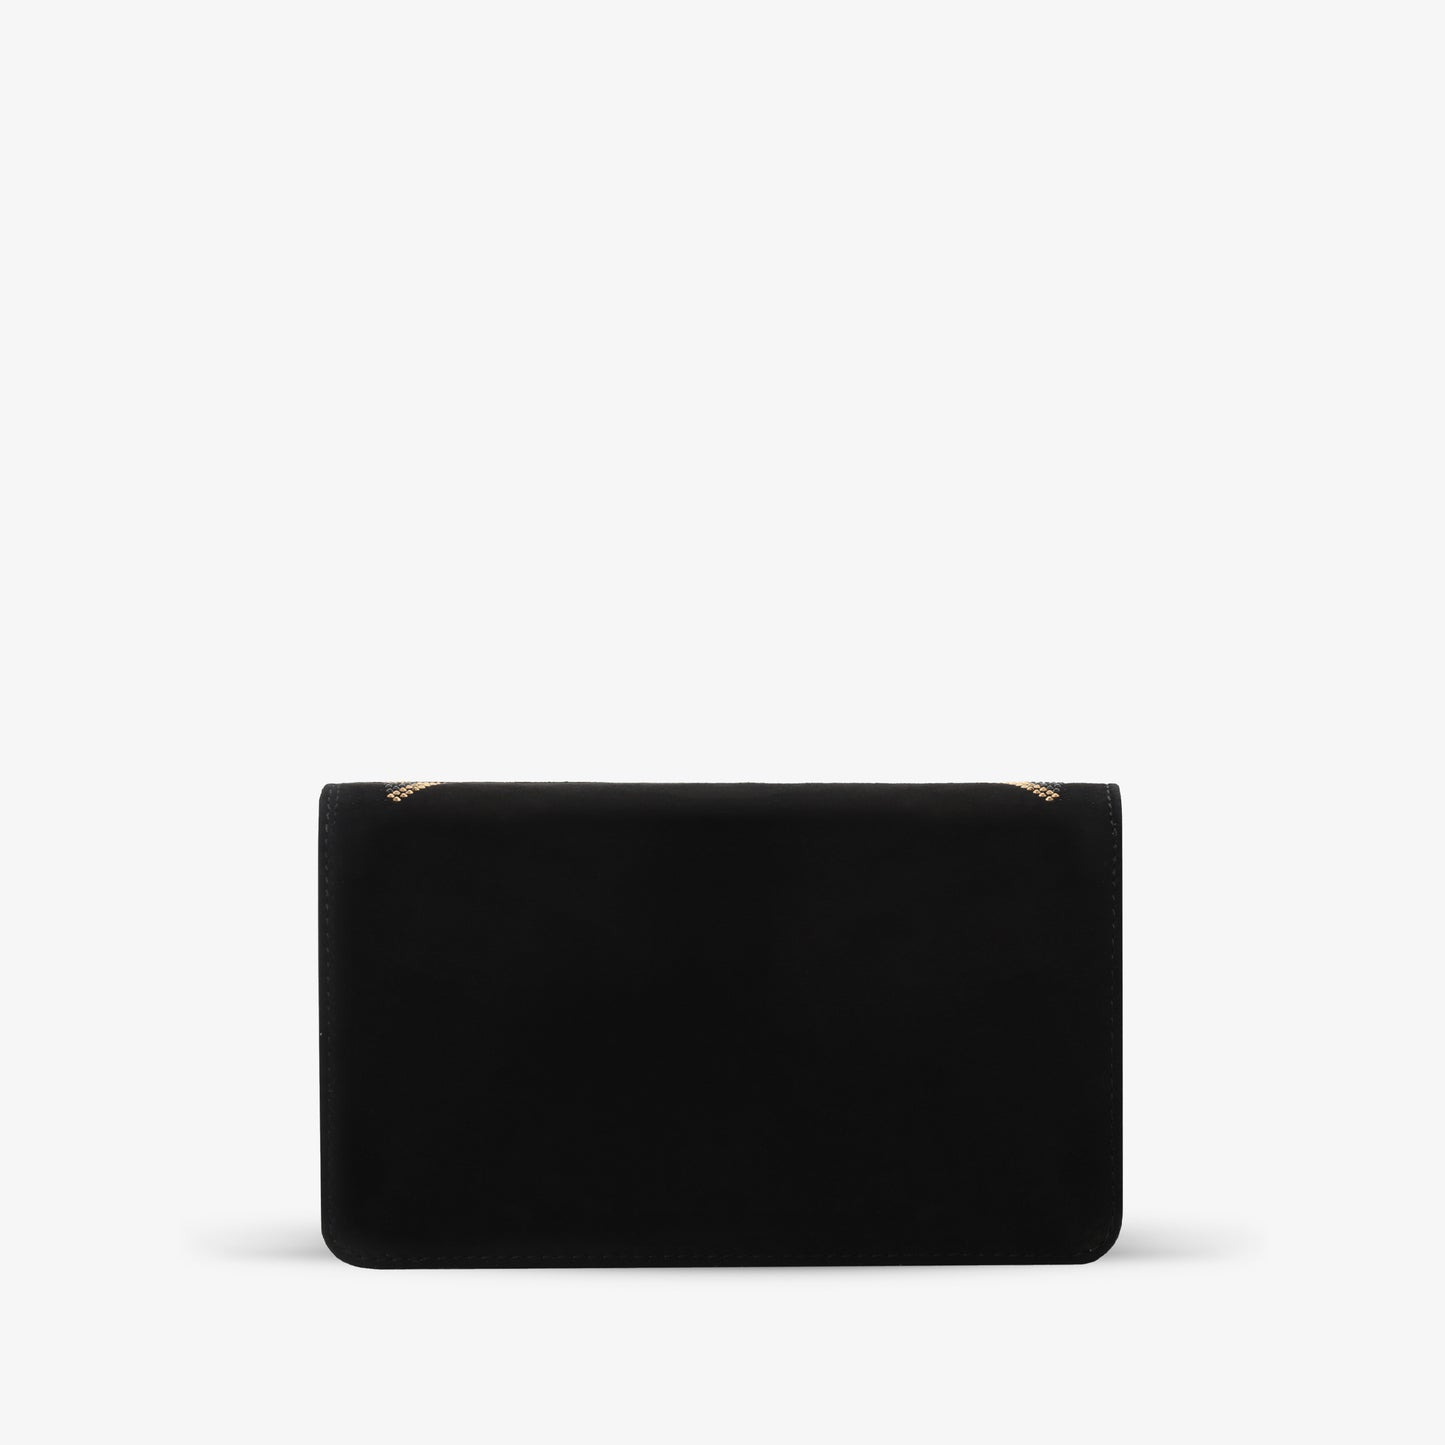 The Magnolia Black Glitter Leather Handbag